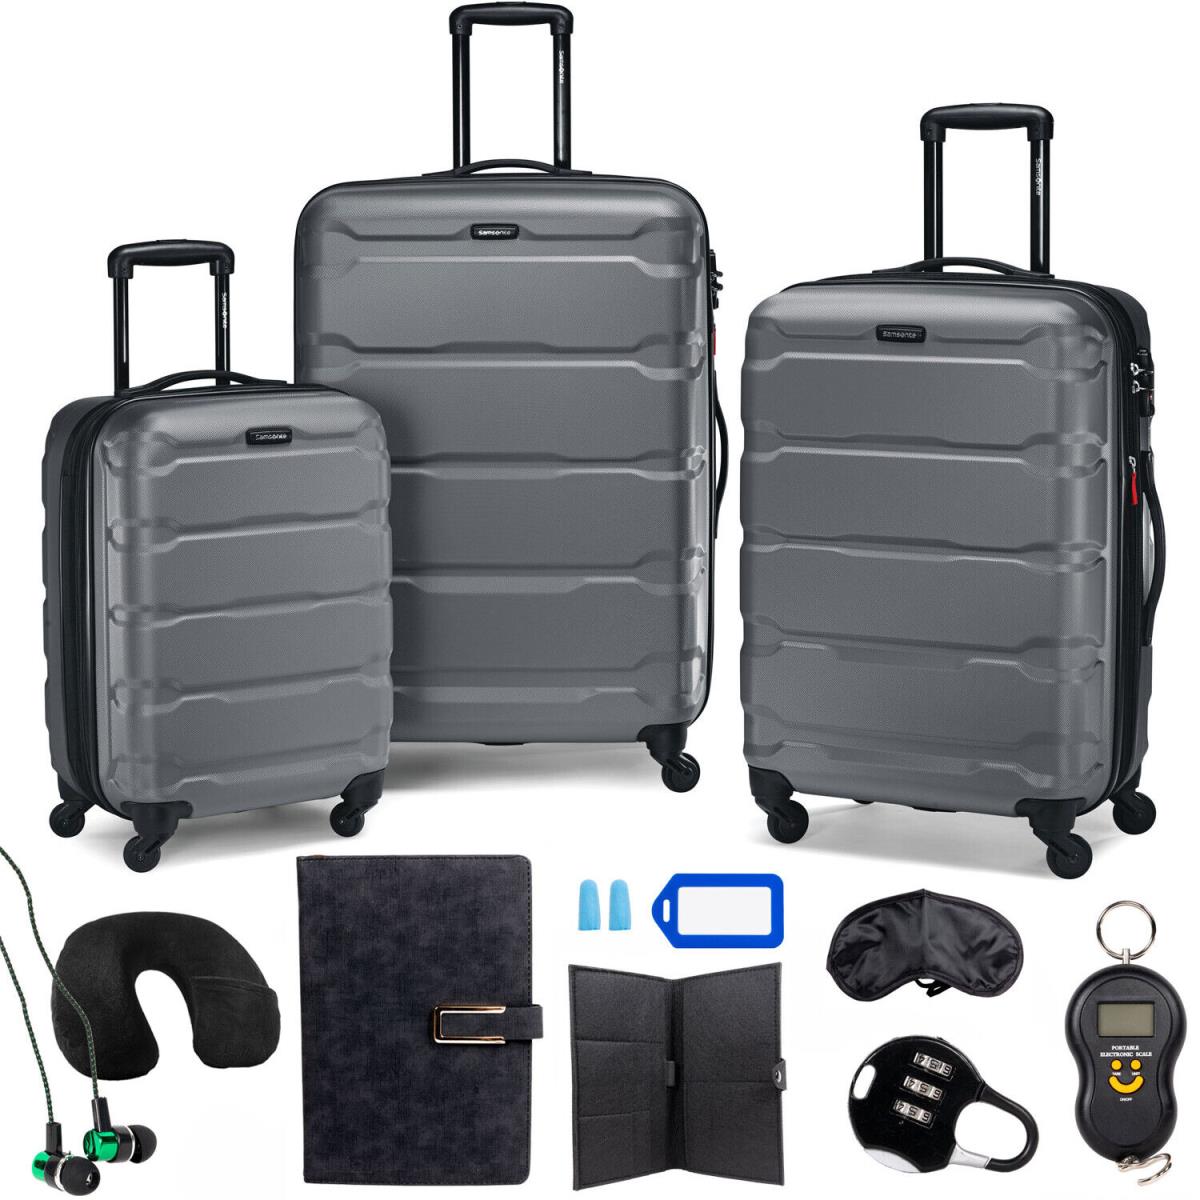 Samsonite Omni Hardside Nested Luggage Spinner Set Charcoal w/10pc Accessory Kit